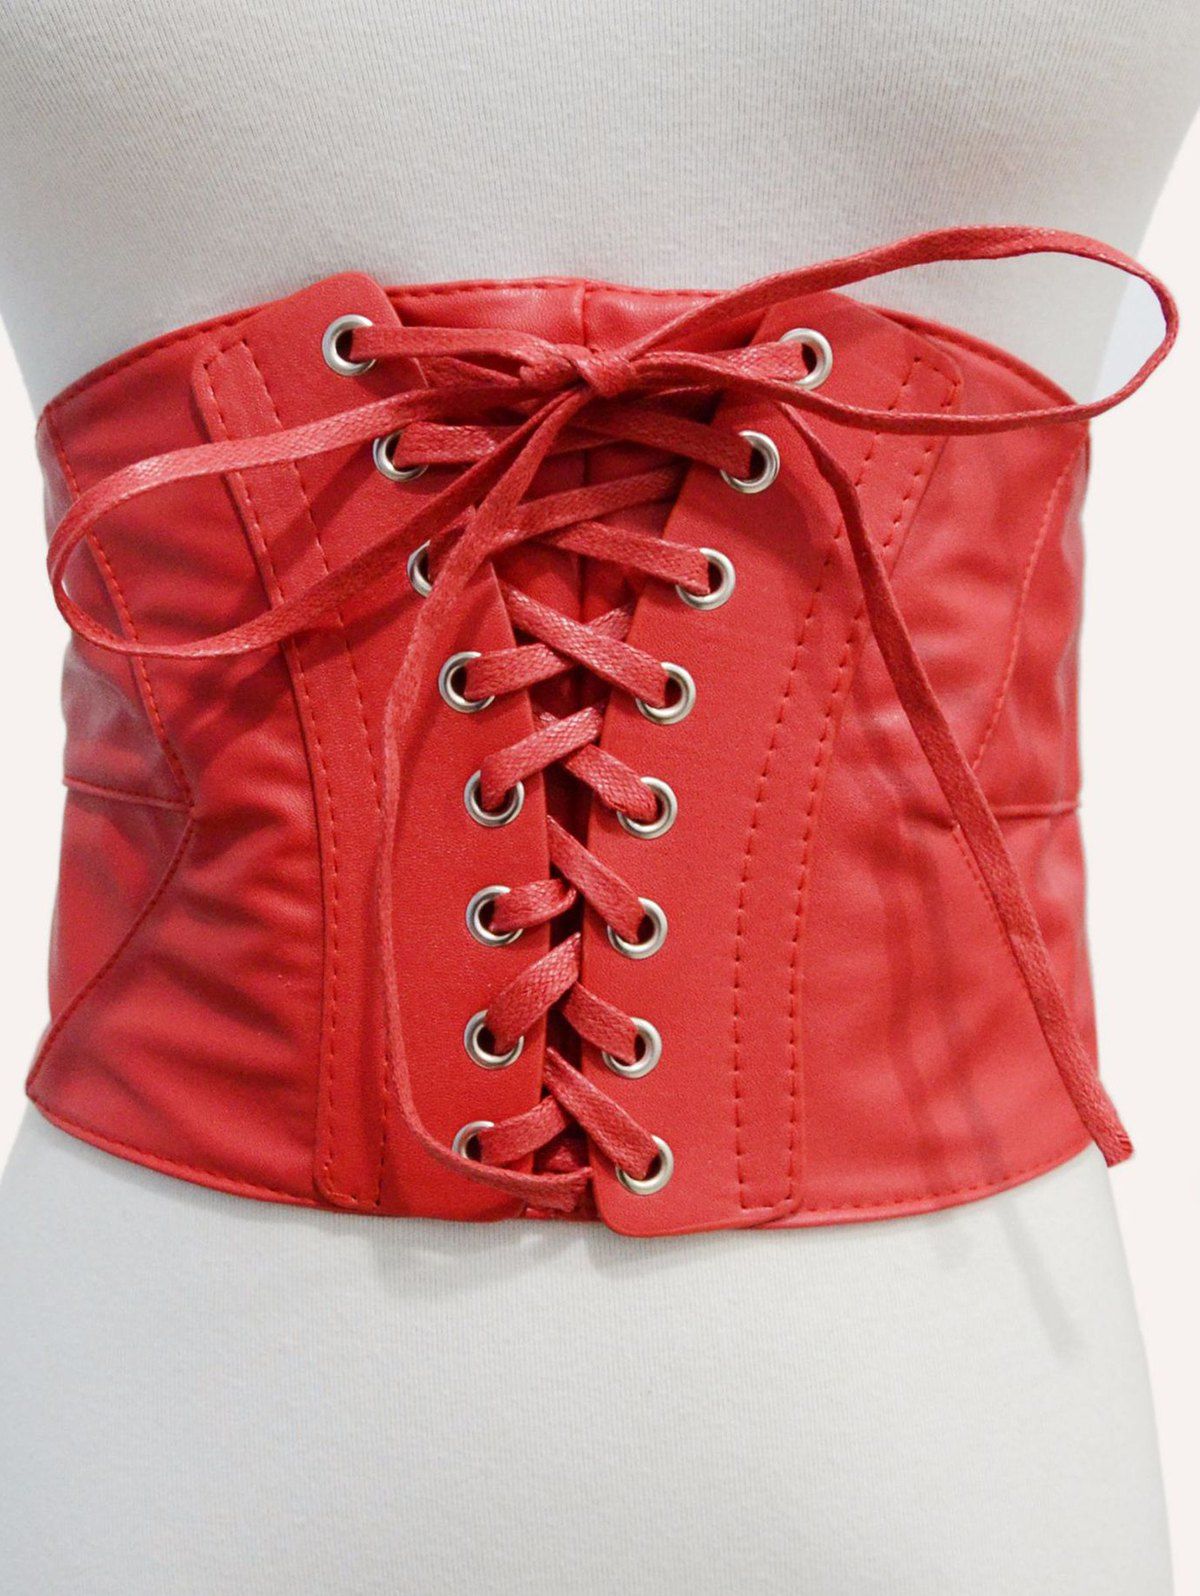 Lace Up PU Wide Waist Belt Shirt Dress Decoration - RED 1PC